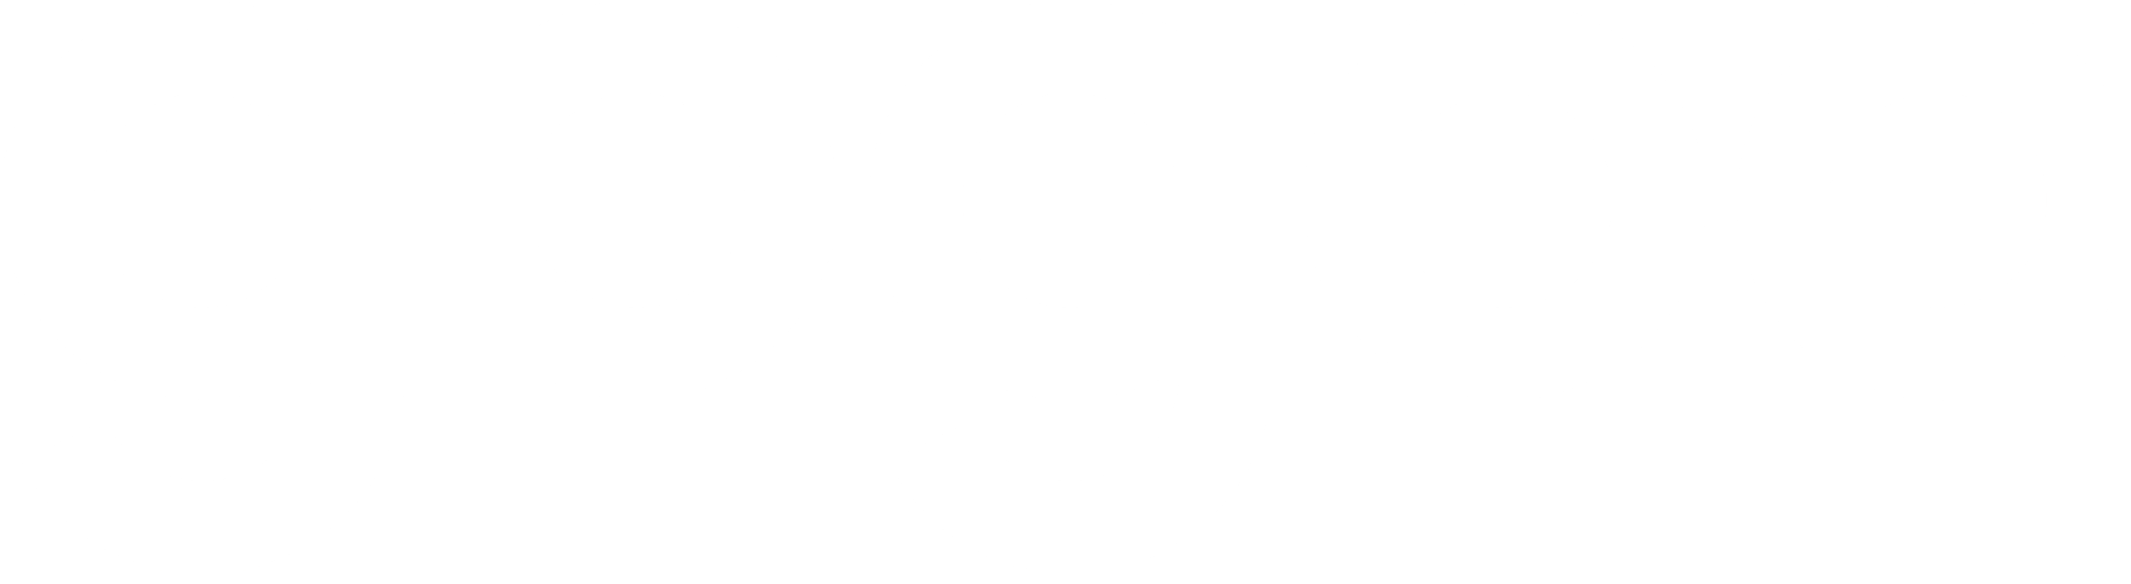 gogoo logo